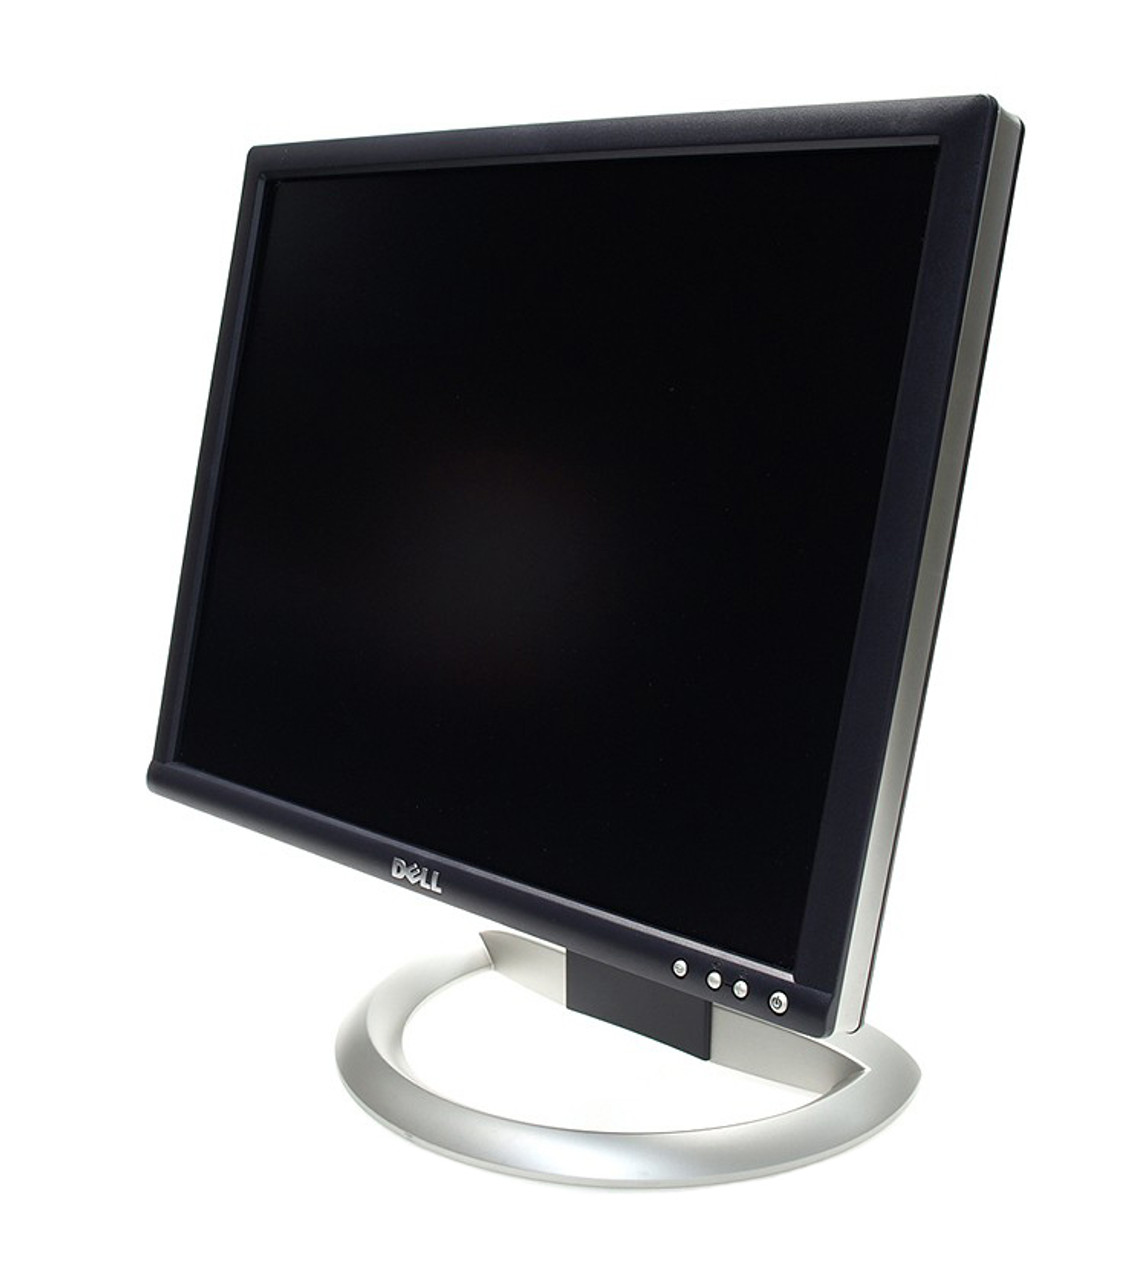 1505FP-9859 - Dell 15-inch 1505FP 1024 x 768 at 75Hz TFT Flat Panel LCD Monitor (Refurbished)